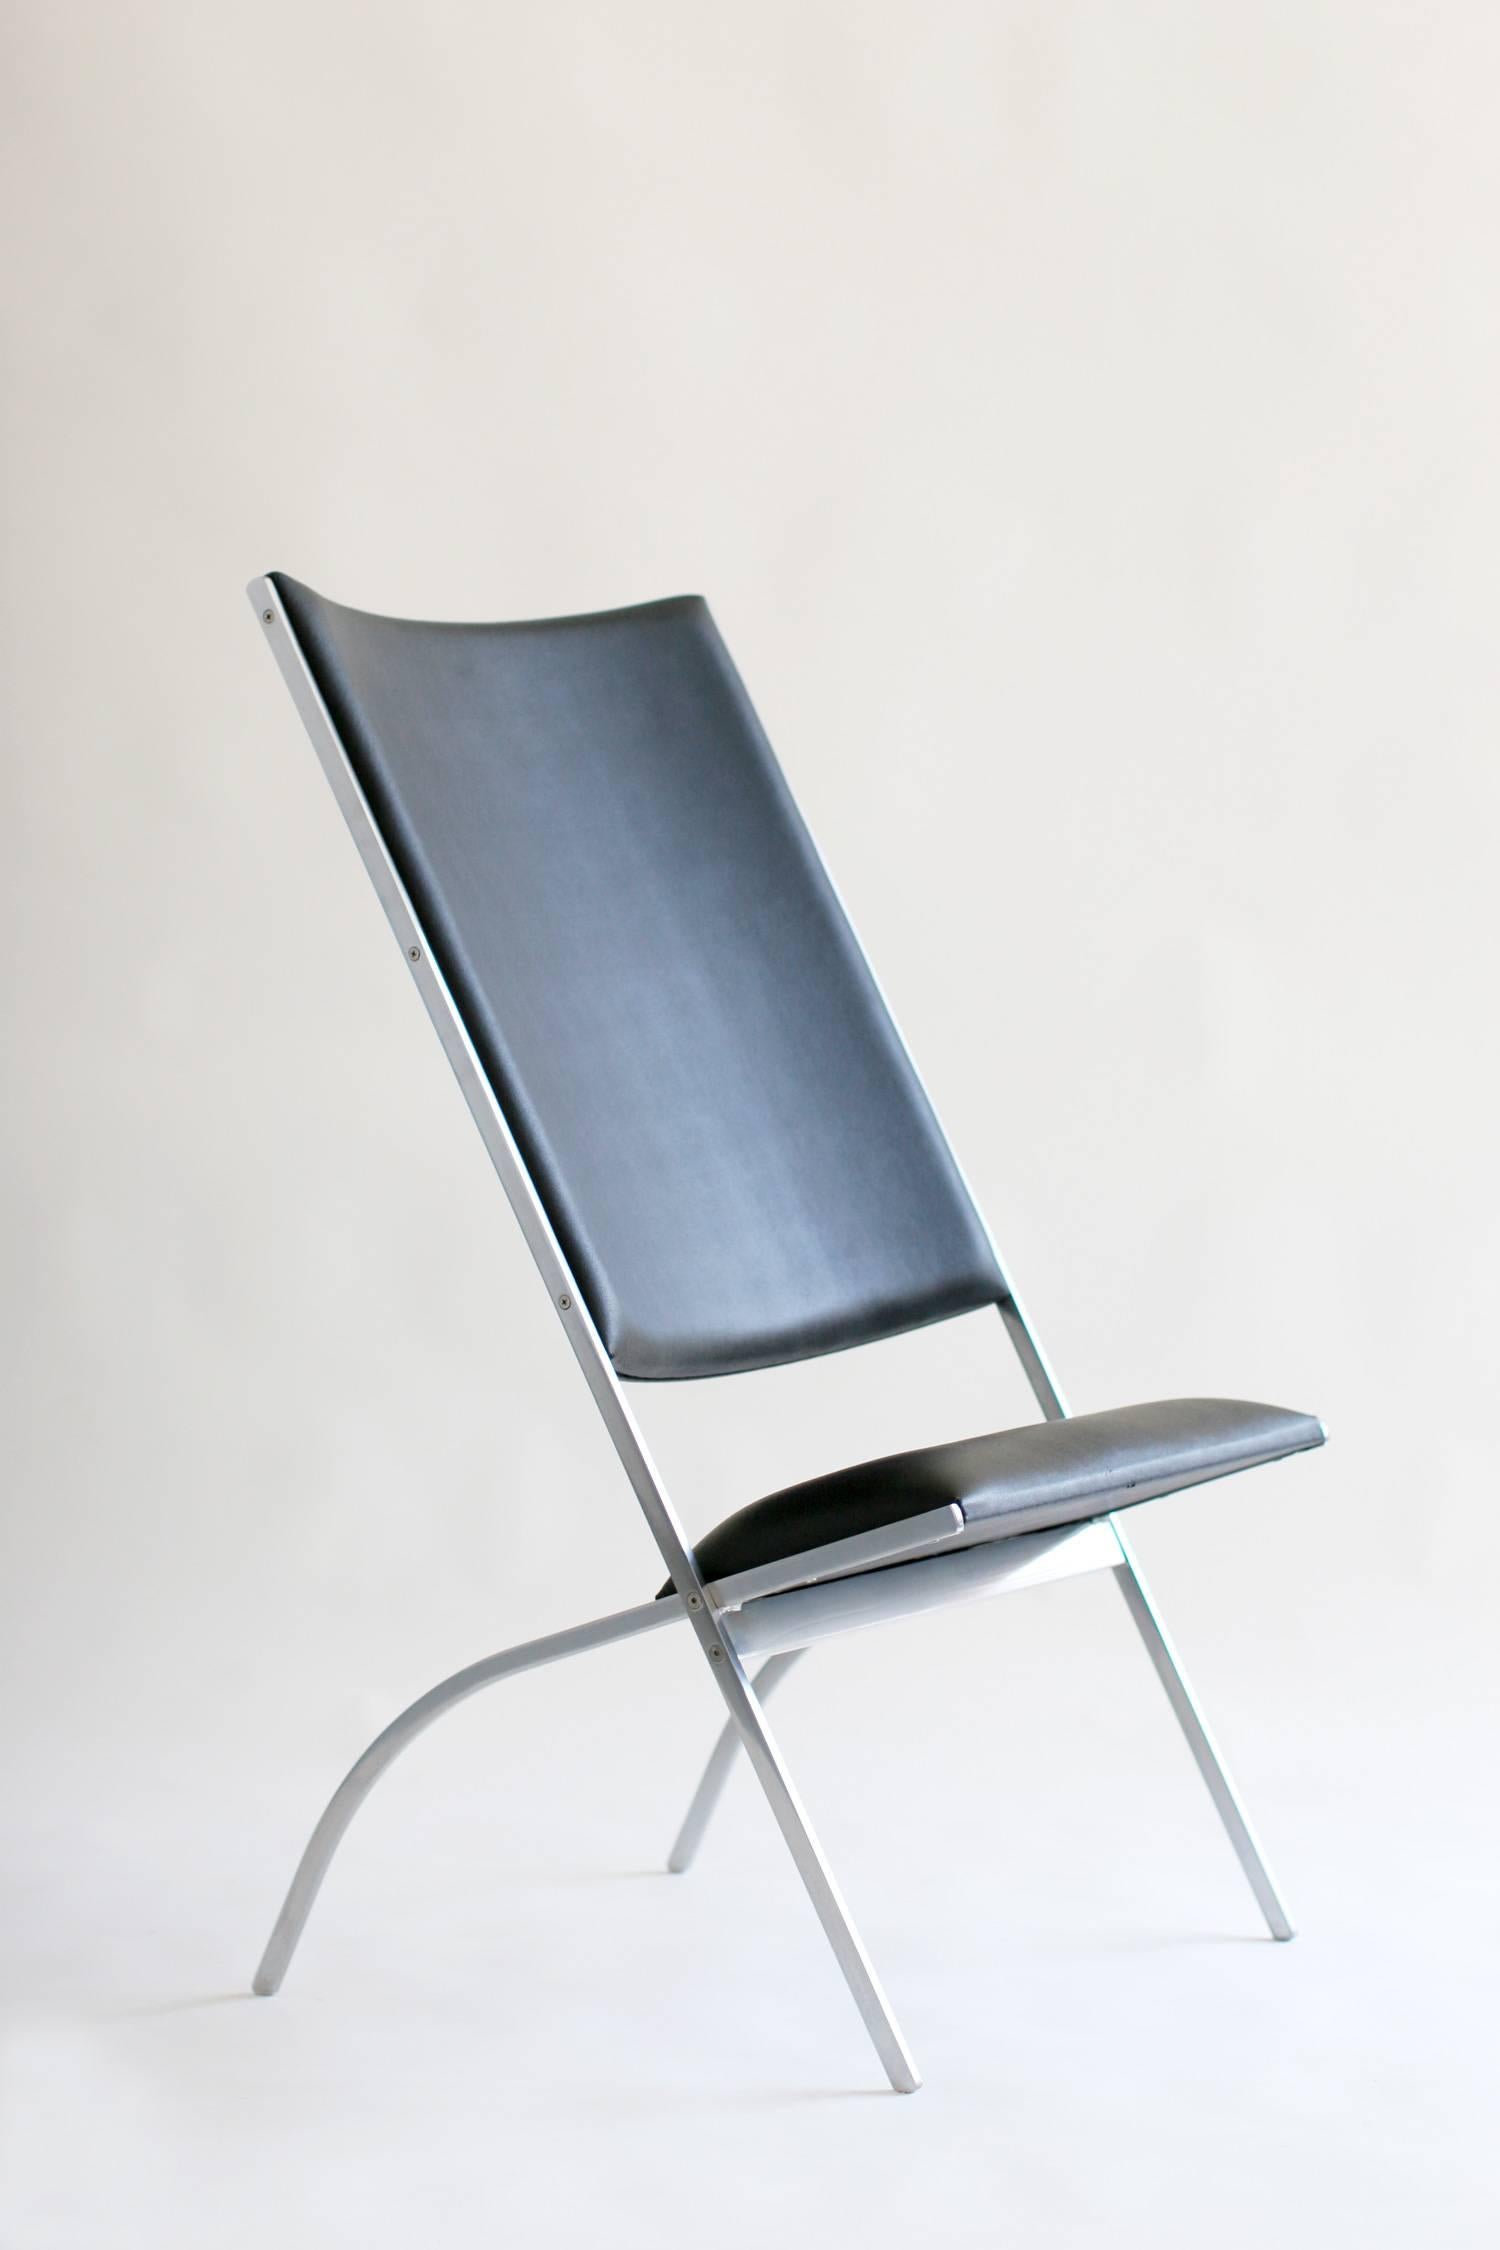 Chair 'Pontiponti' aka 'Gabriela' and 'Sedia di poco sedile.'
Design by Gio Ponti (1971).
Manufactured by Pallucco, Italy.
Chrome-plated steel, black vinyl upholstery.
Measures: W 59.0 cm / D 60.0 cm / H 107.0 cm.